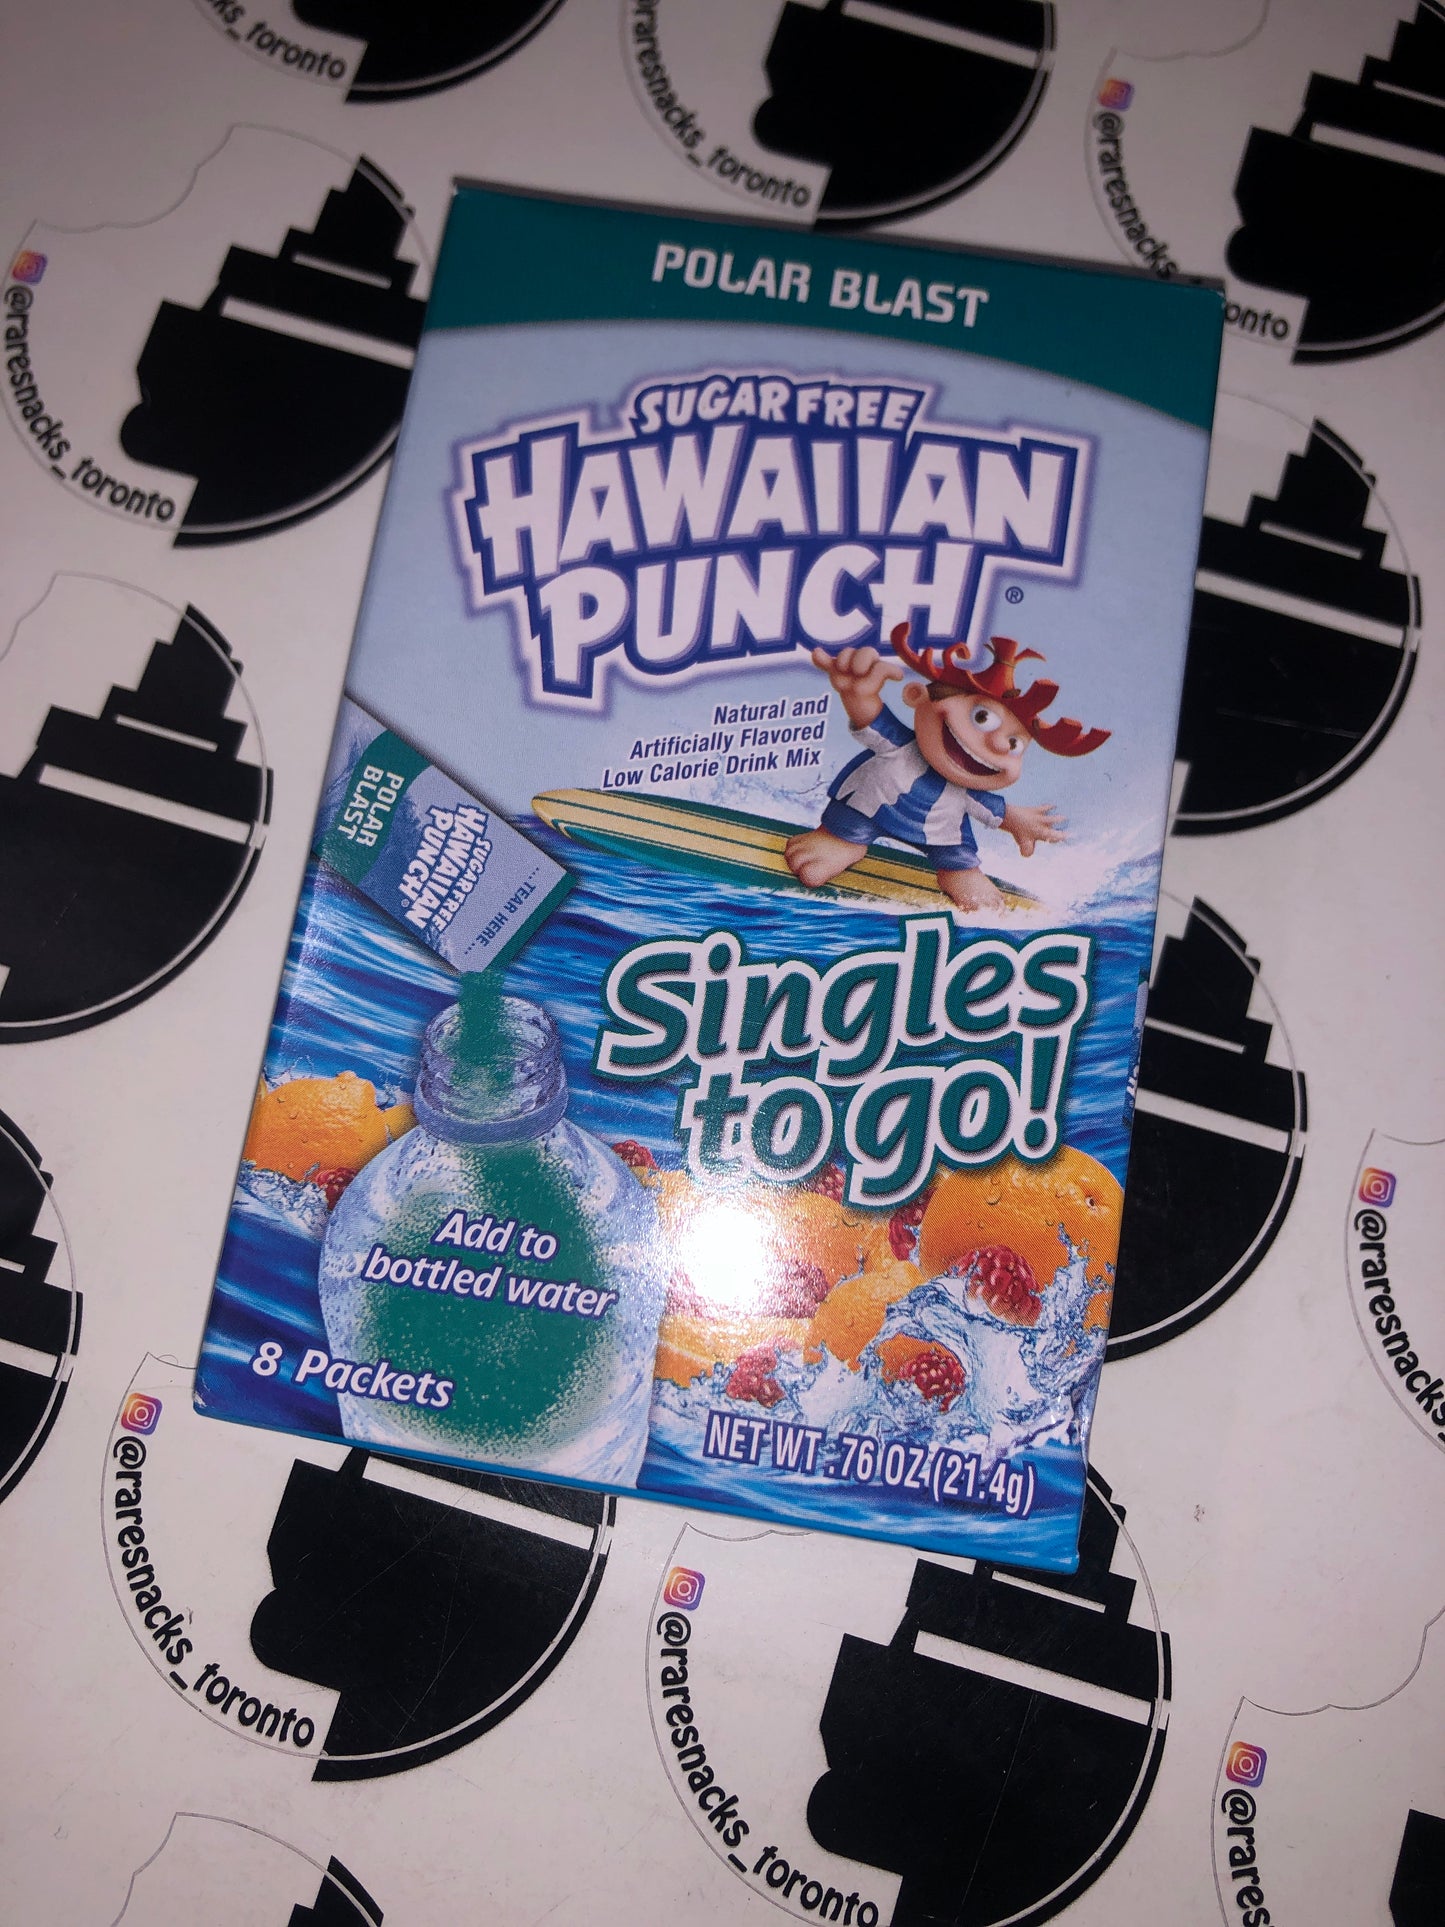 Hawaiian Punch Polar Blast sugar free singles to go